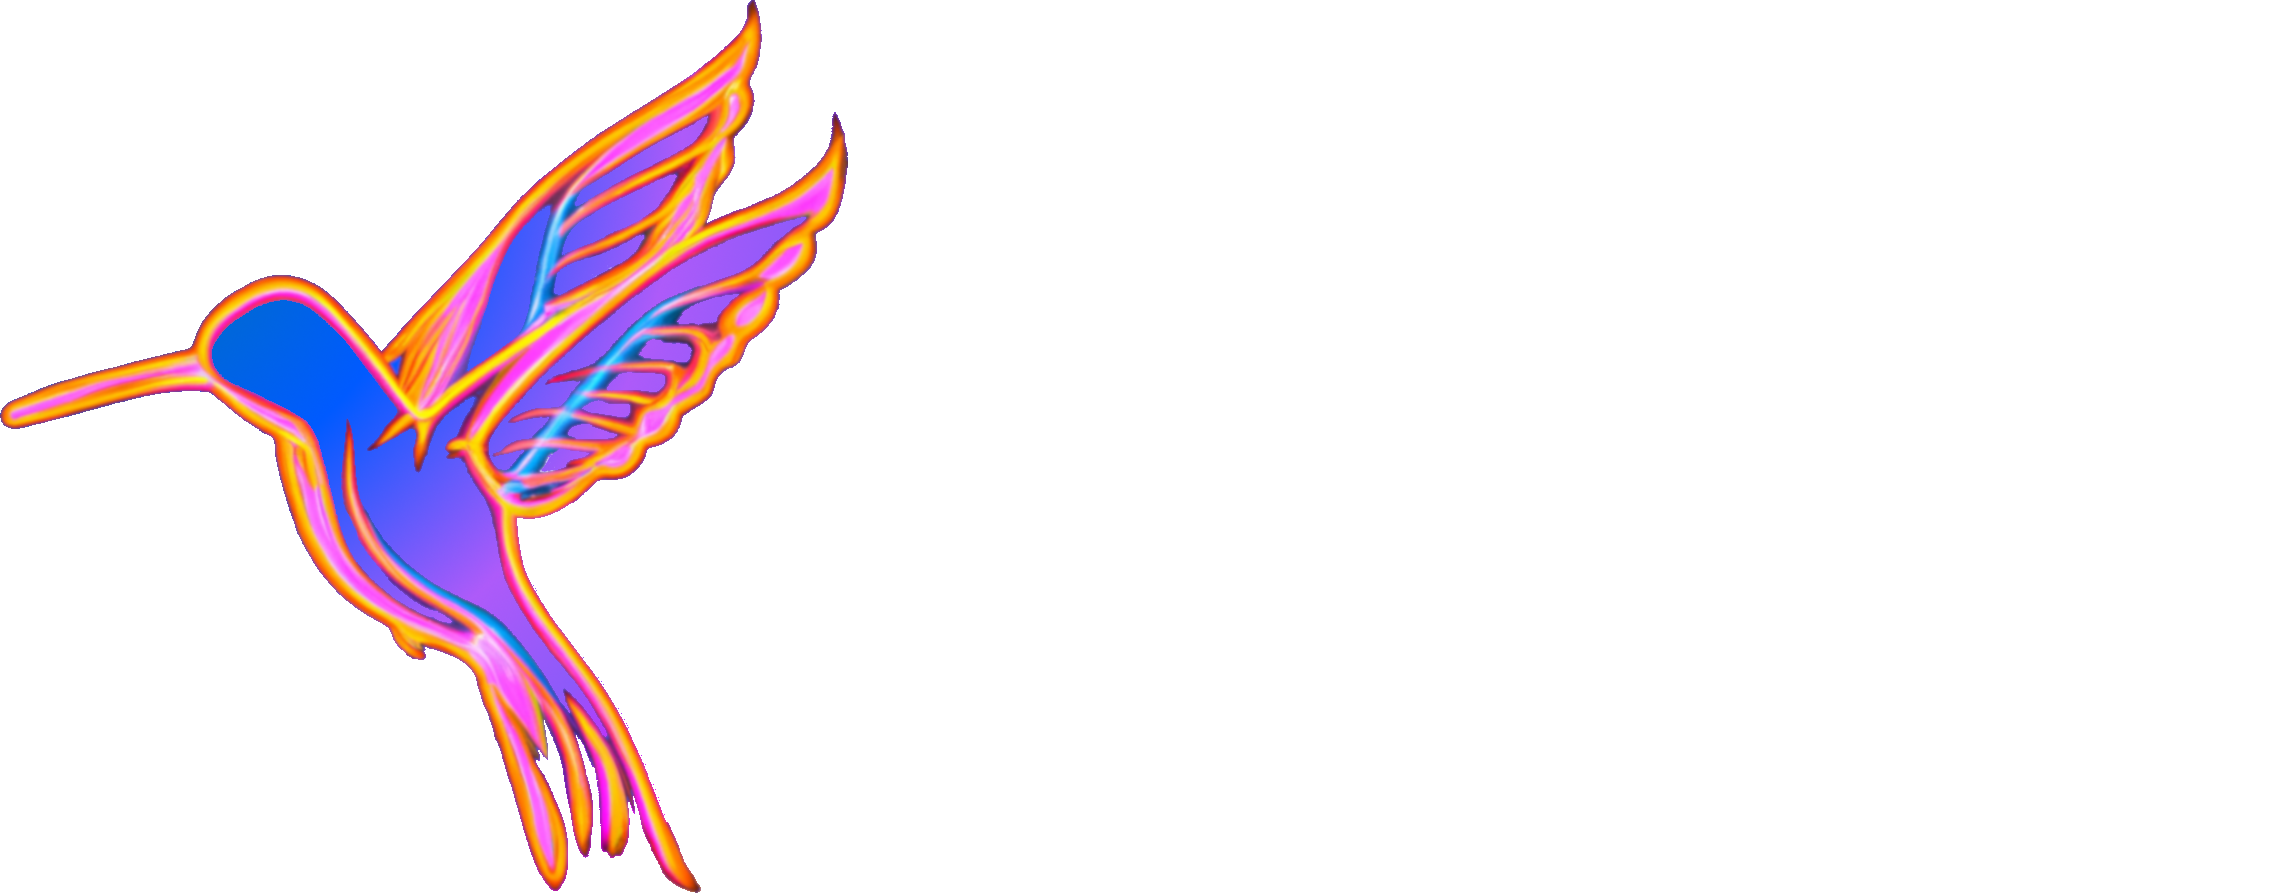 Flutteris